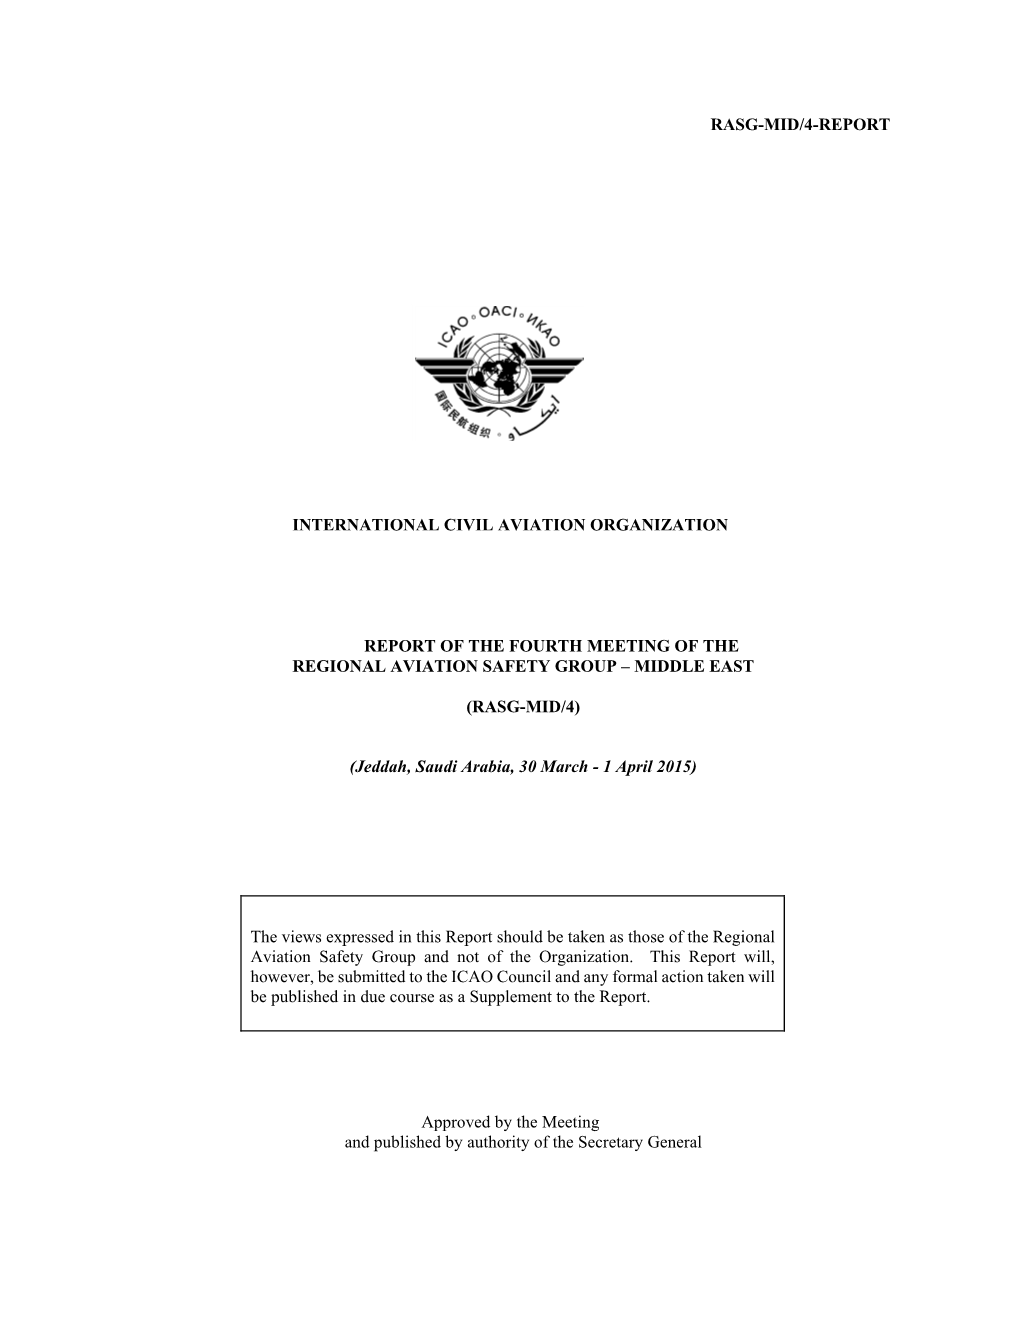 Rasg-Mid/4-Report International Civil Aviation